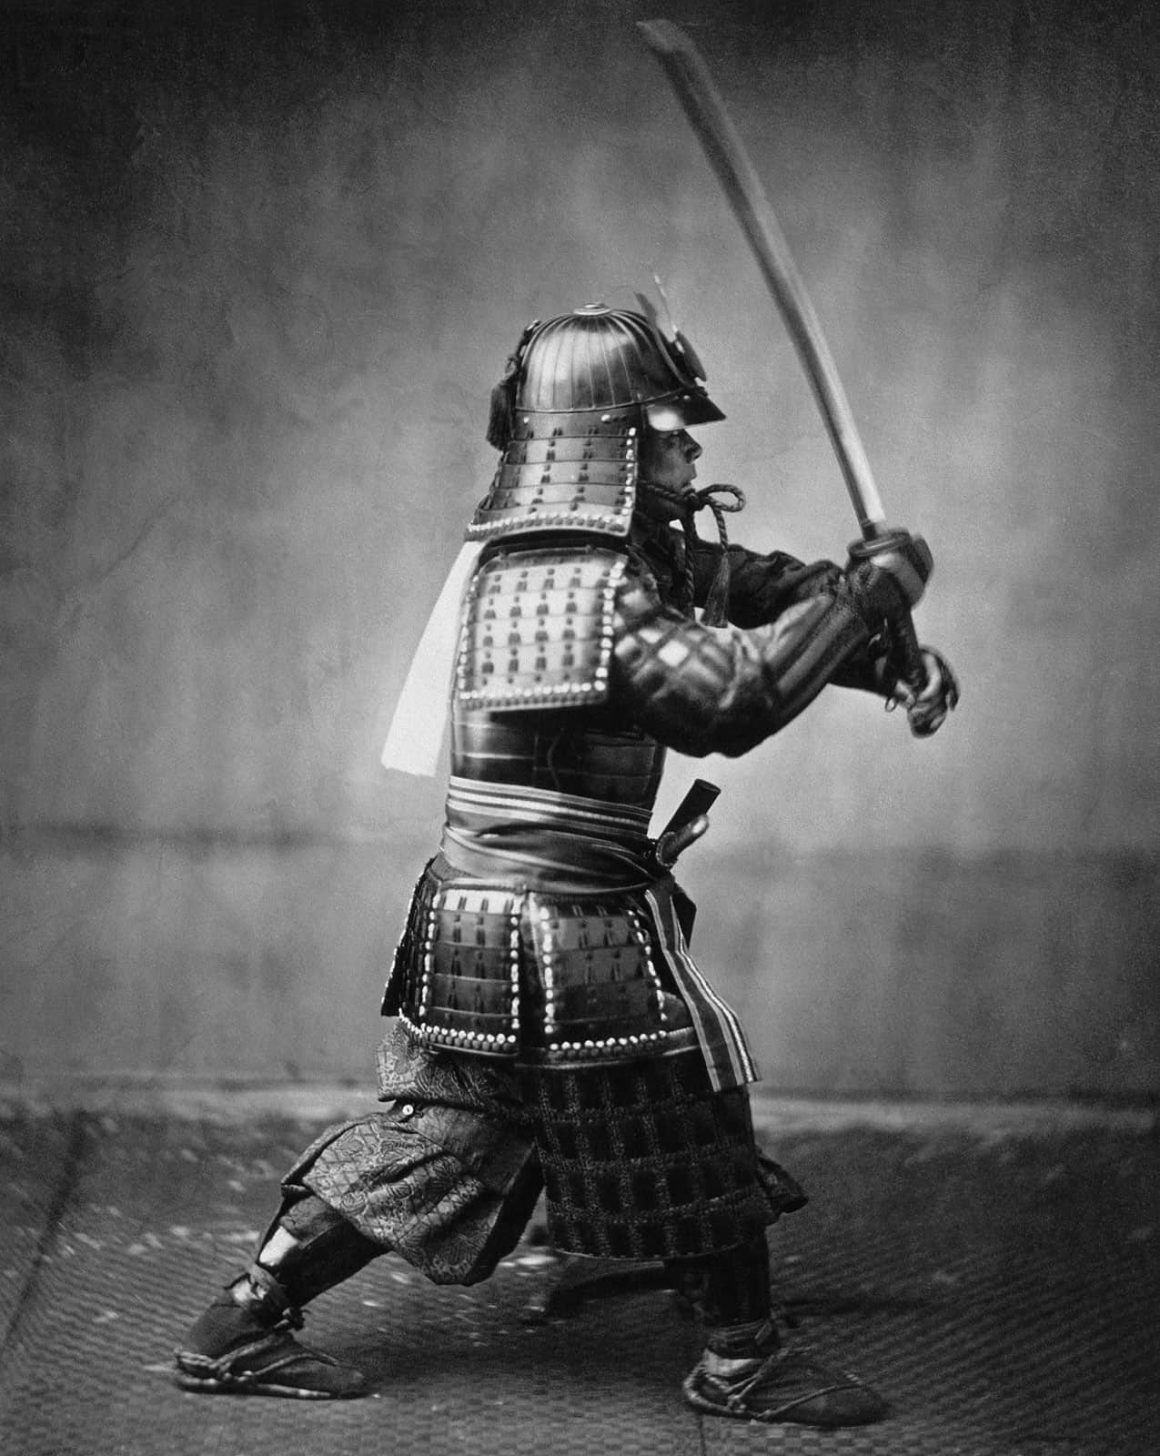 Samurai Angriff mit dem Katana Schwert